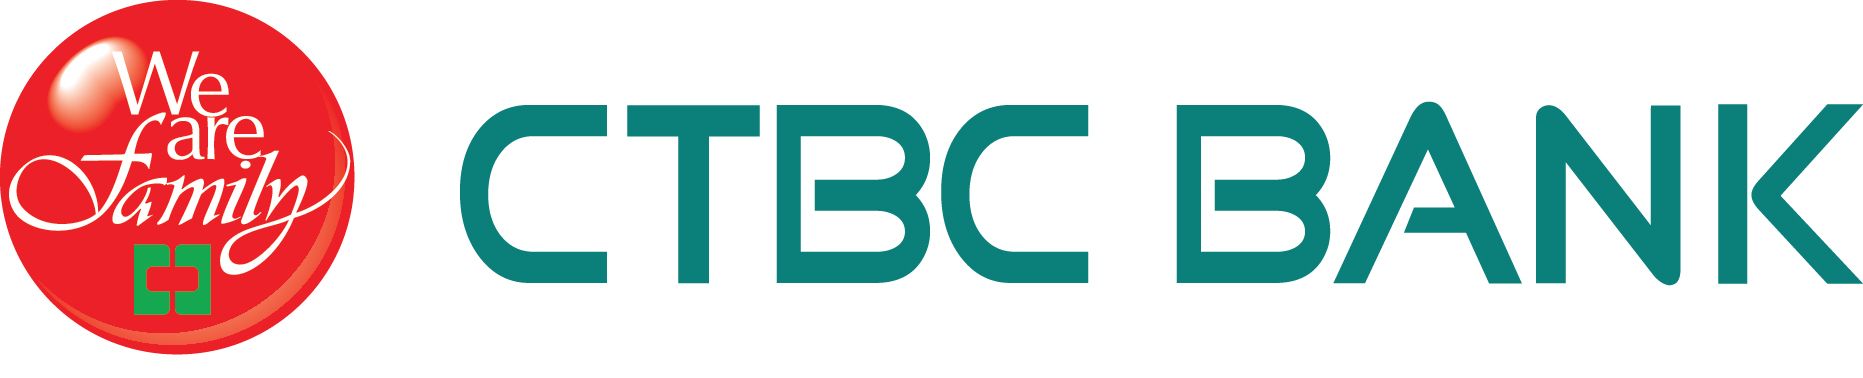 CTBC Bank USA CEO No